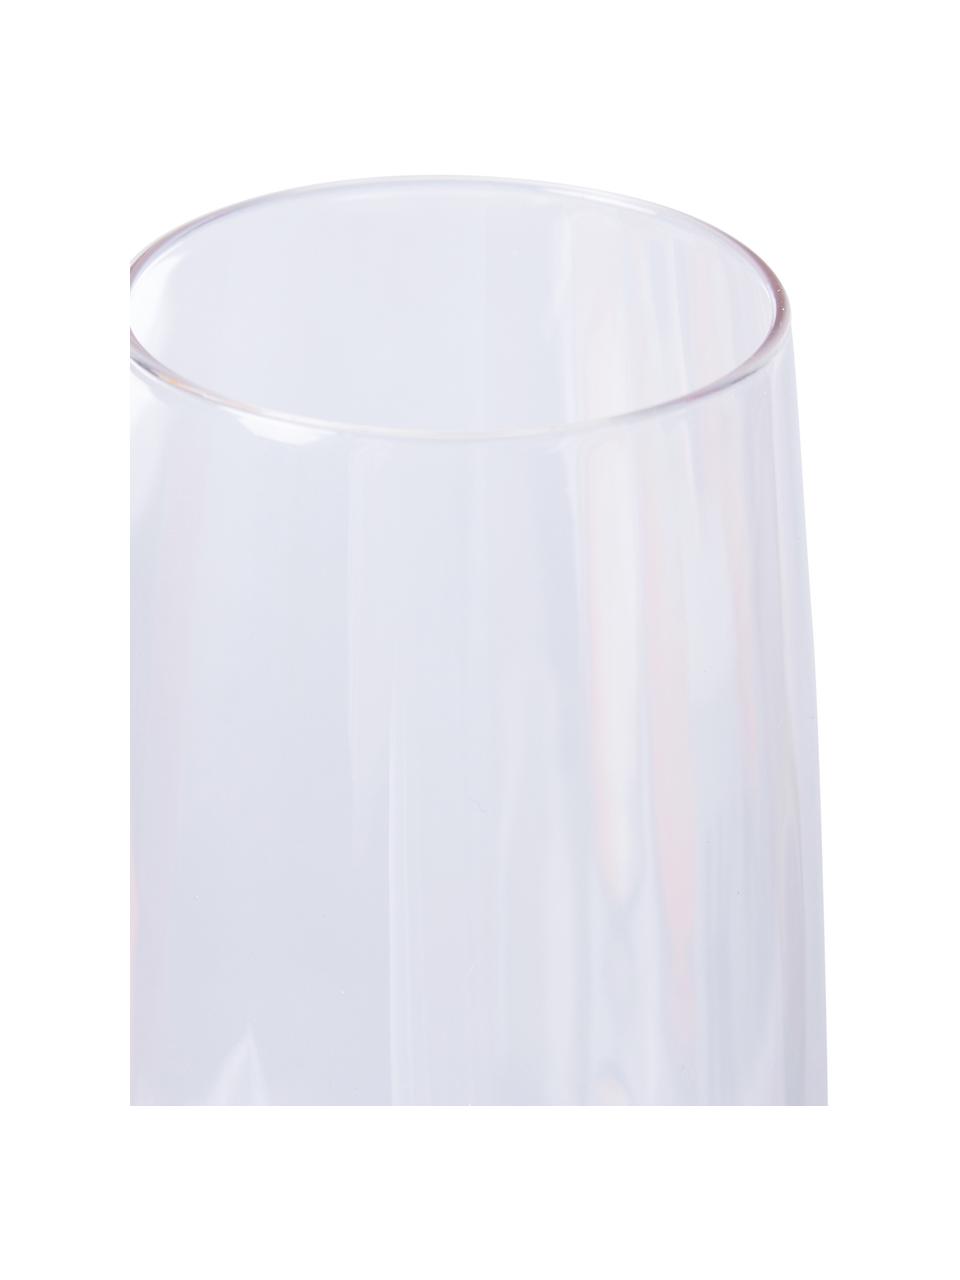 Champagneglas Swirl, 2 stuks, Glas, Transparant, geel, Ø 8 x H 22 cm, 290 ml